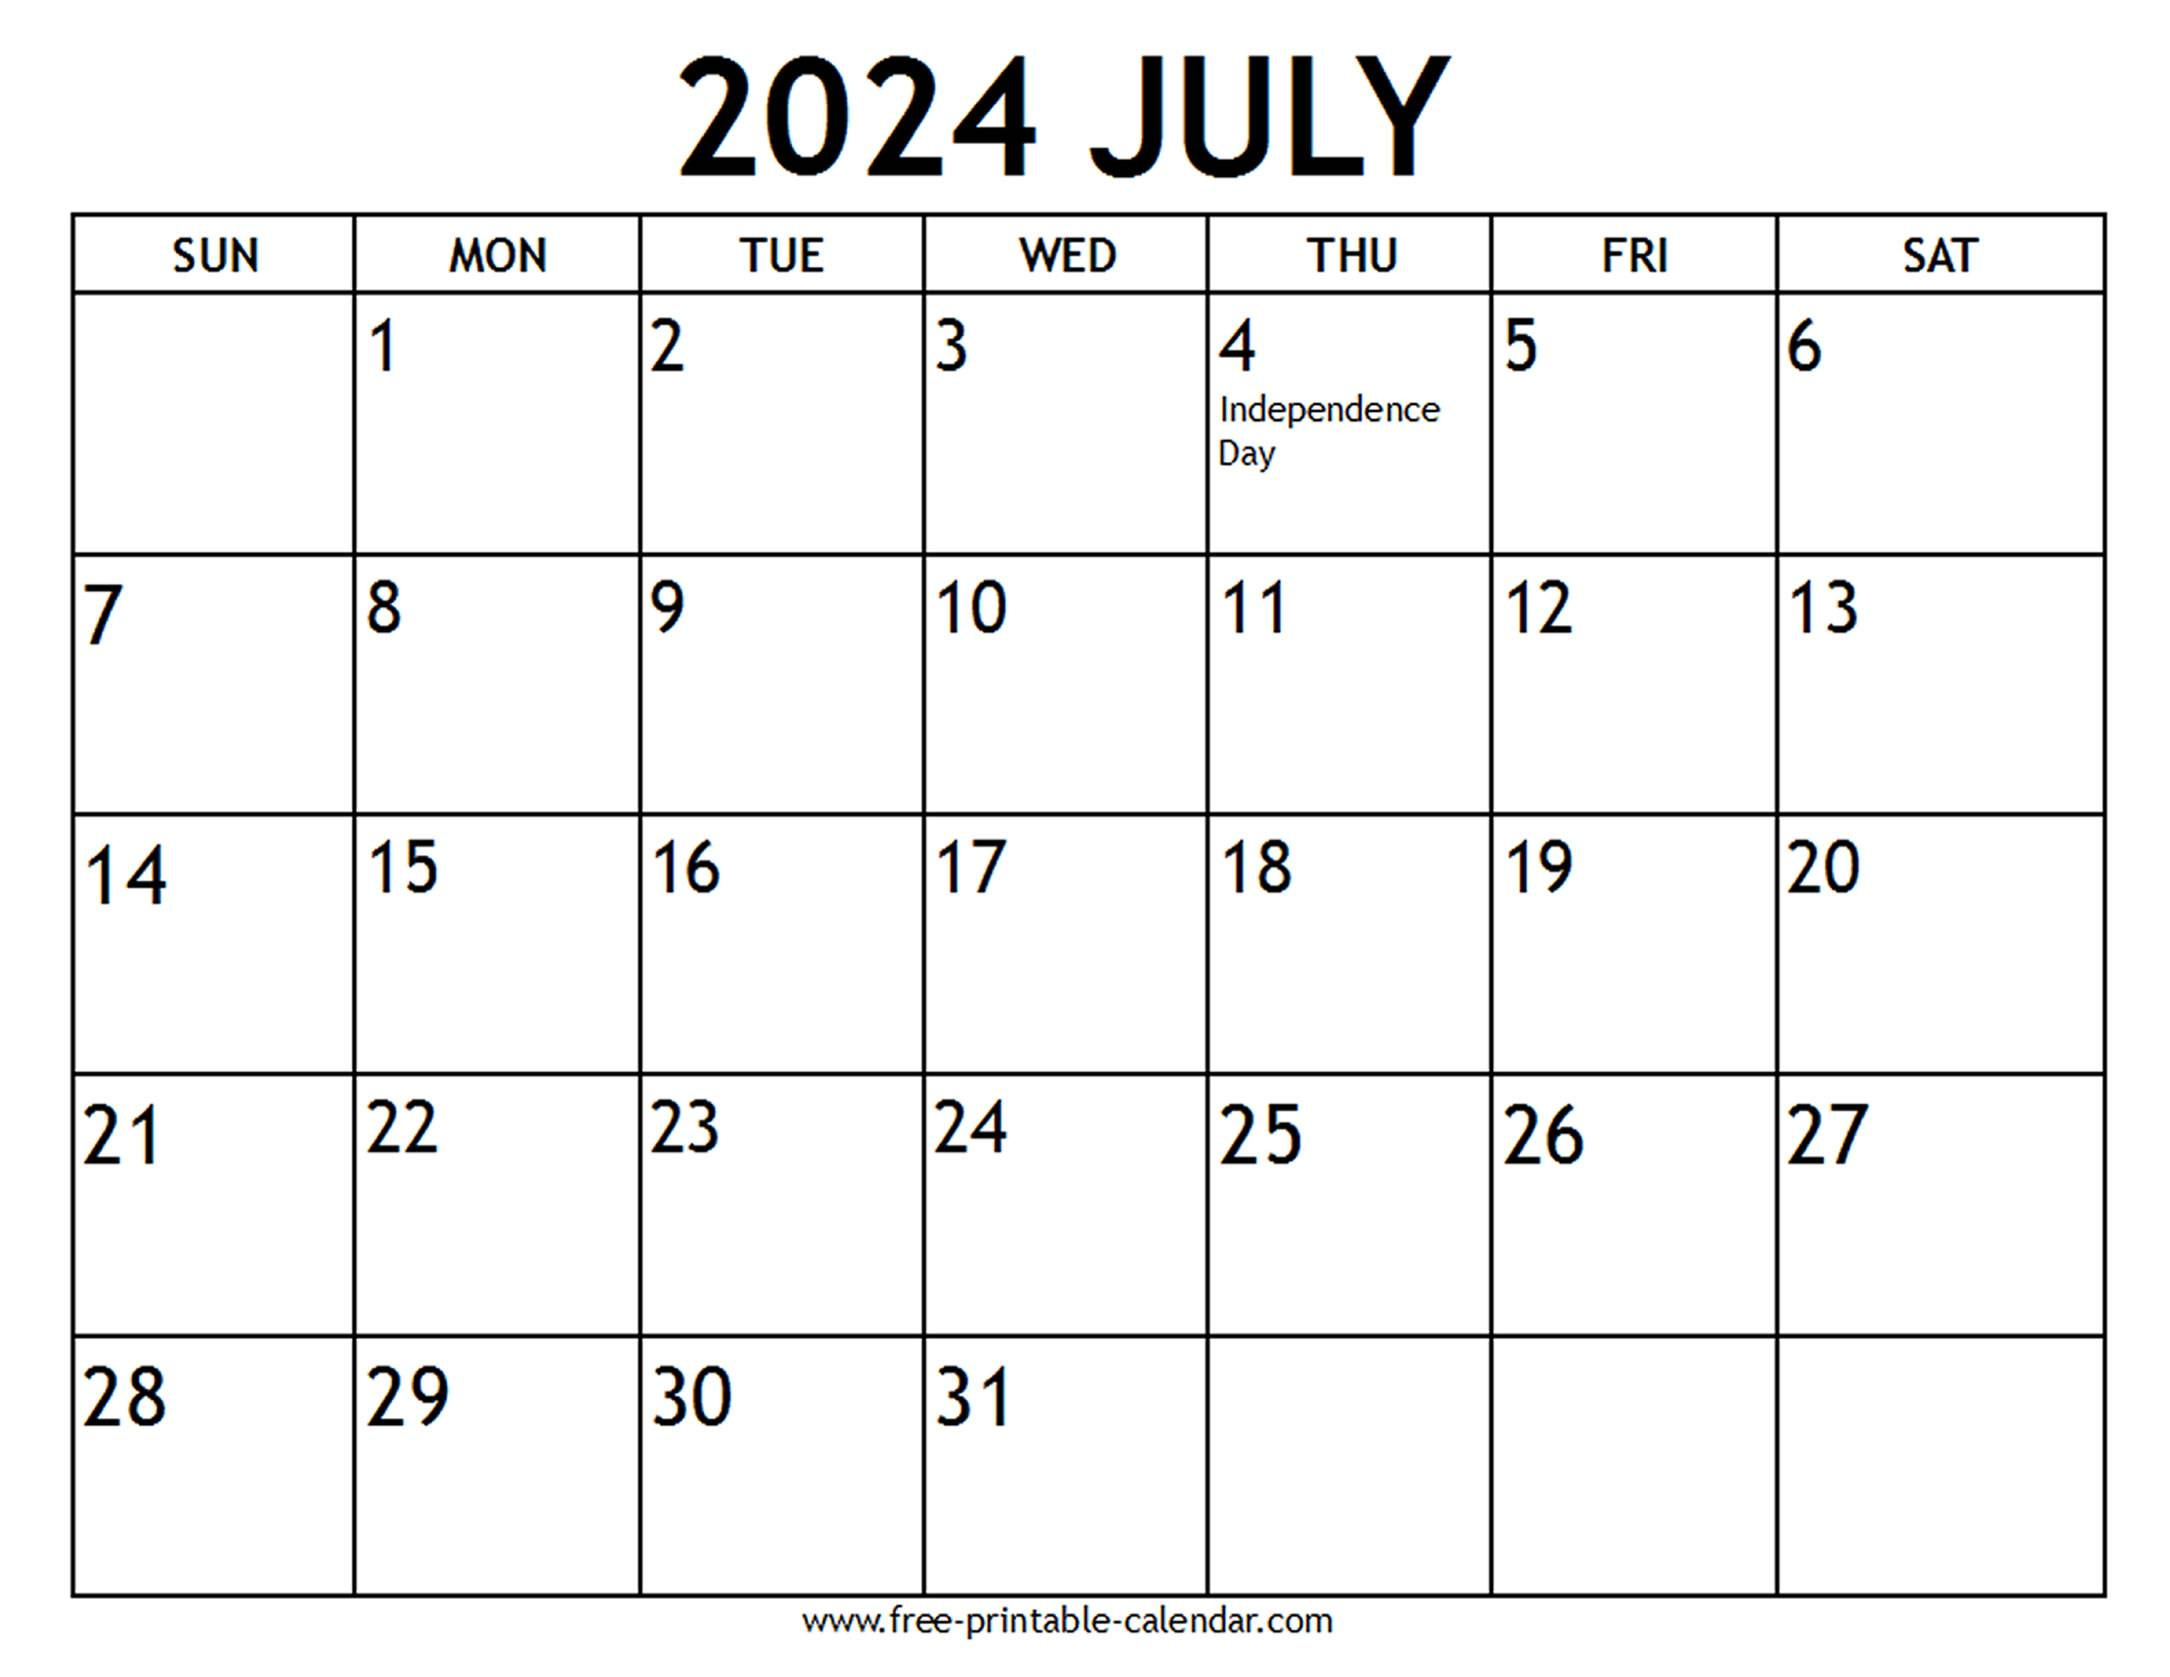 July 2024 Calendar Us Holidays - Free-Printable-Calendar | July 2024 Calendar With Holidays Printable Free